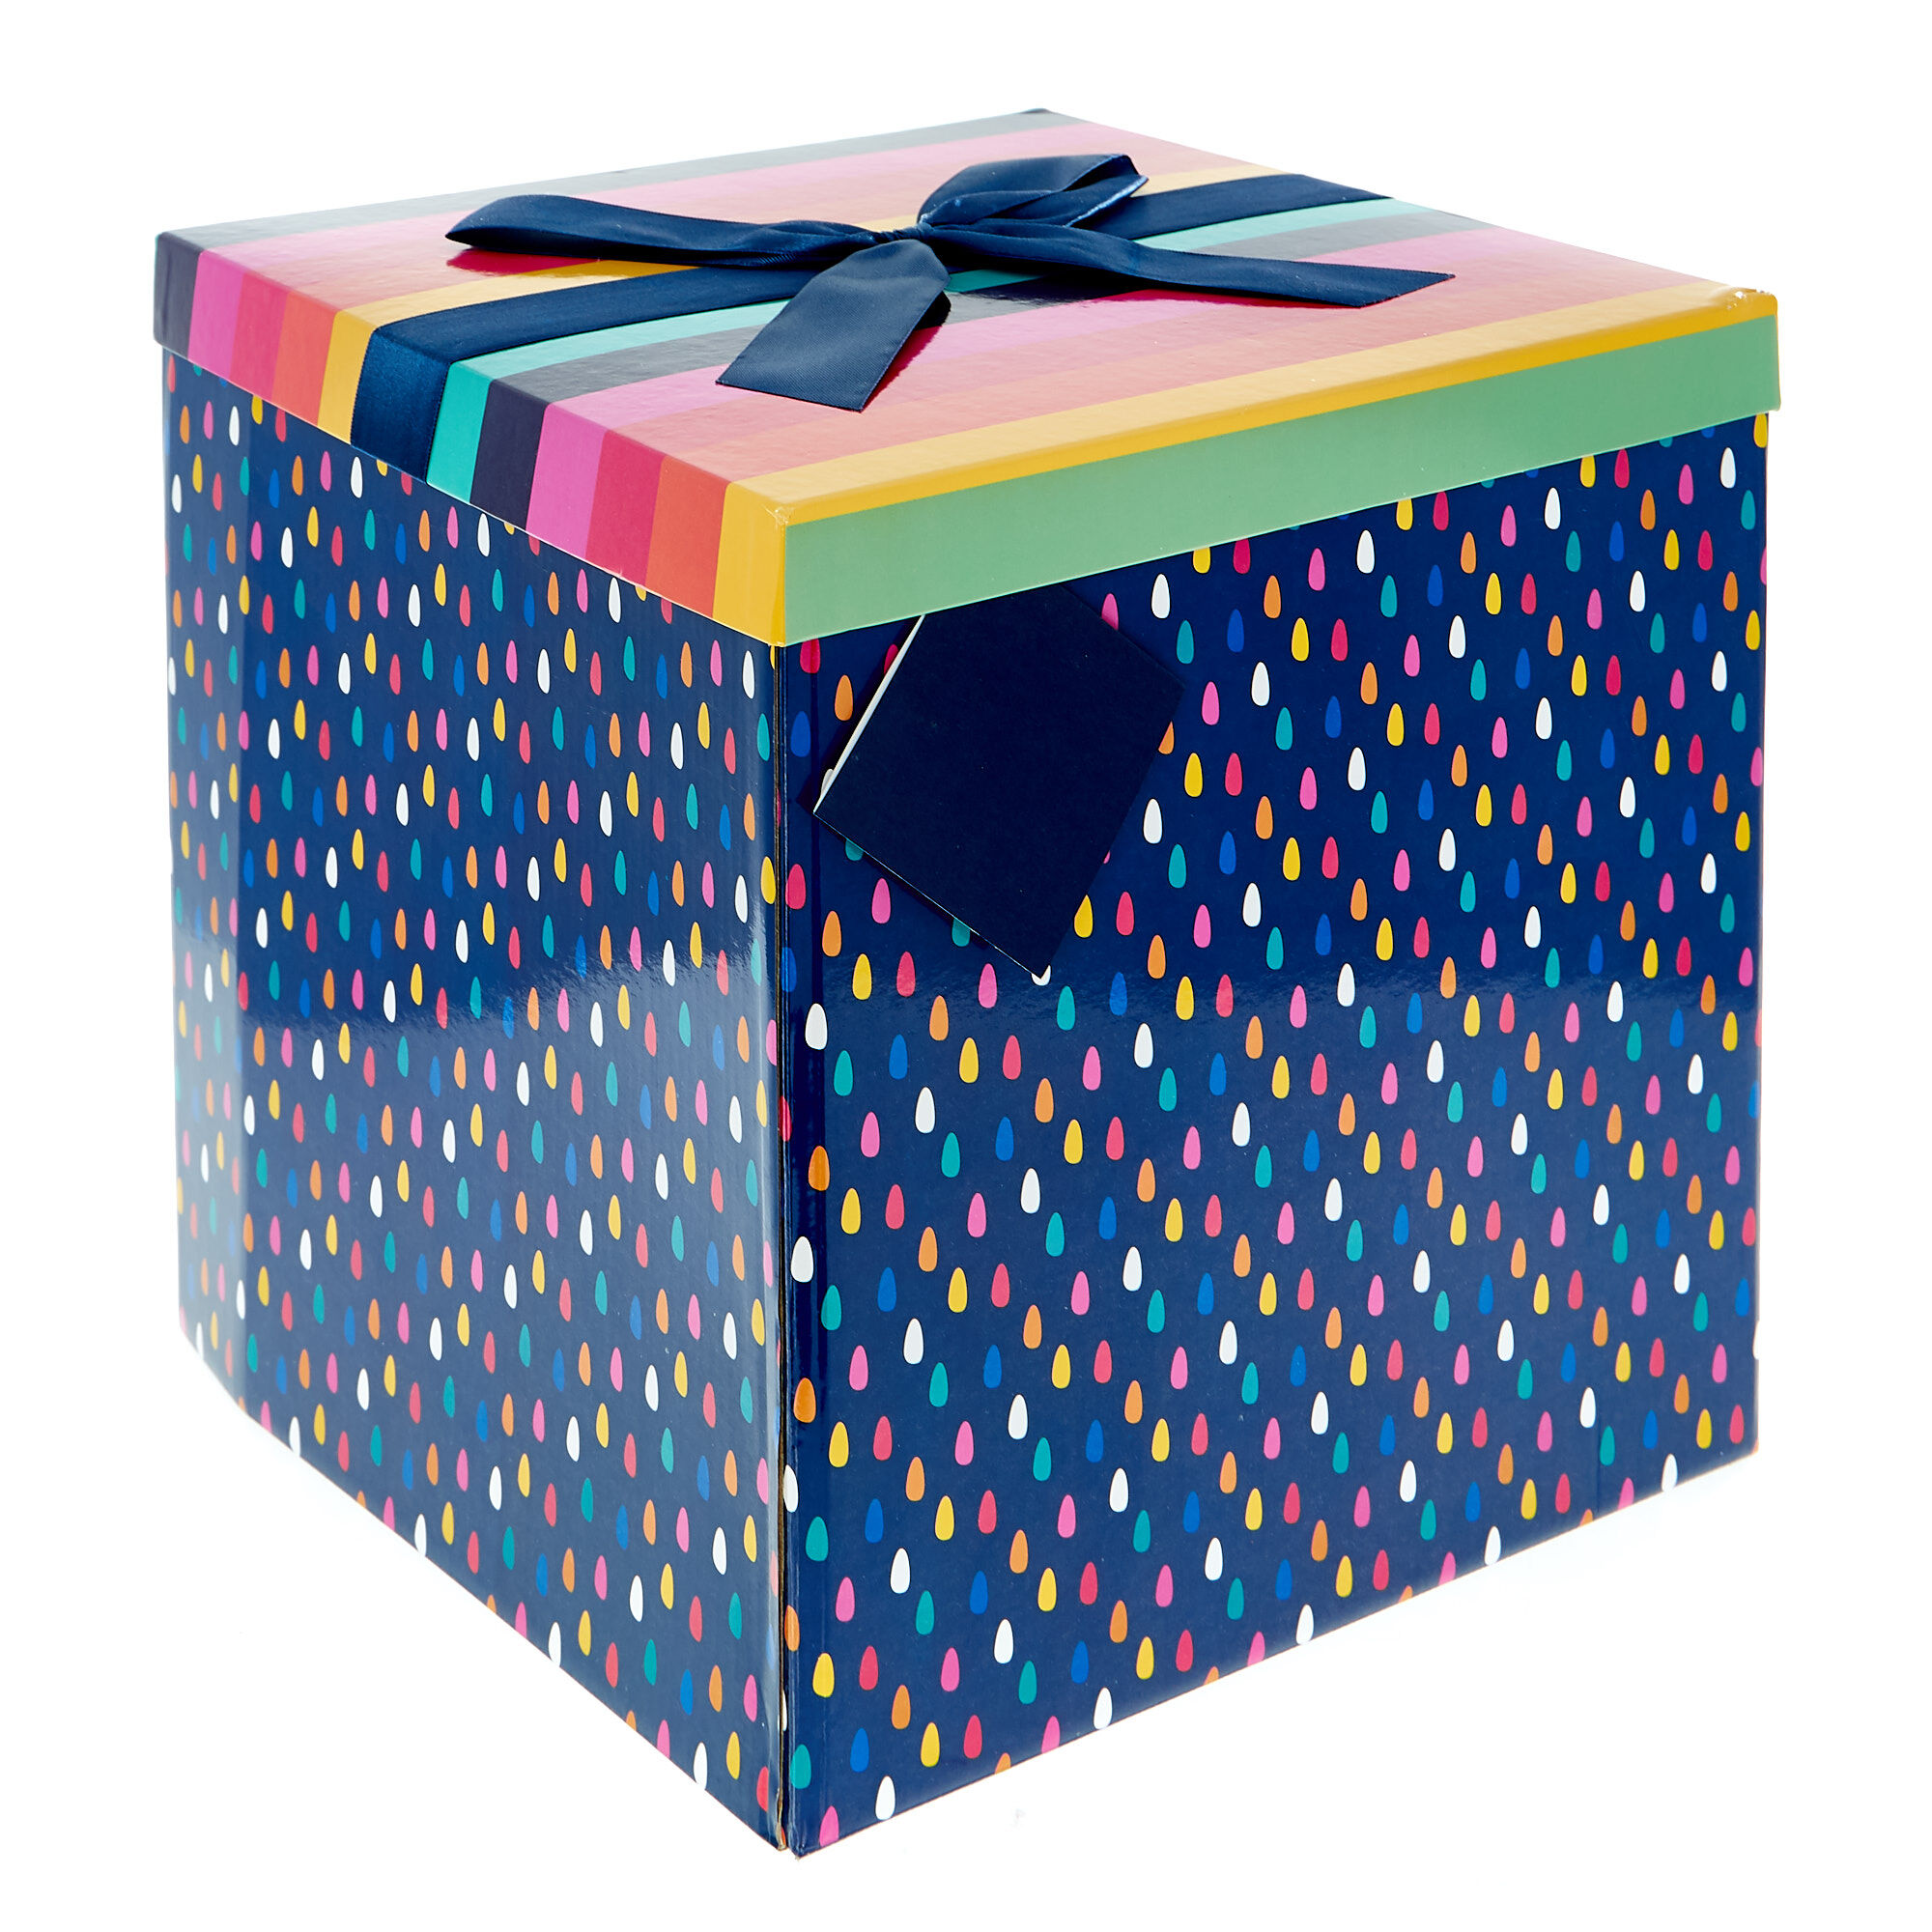 Buy Navy & Gold Polka-Dot Gift Boxes - Set Of 3 for GBP 10.97 | Card Factory  UK